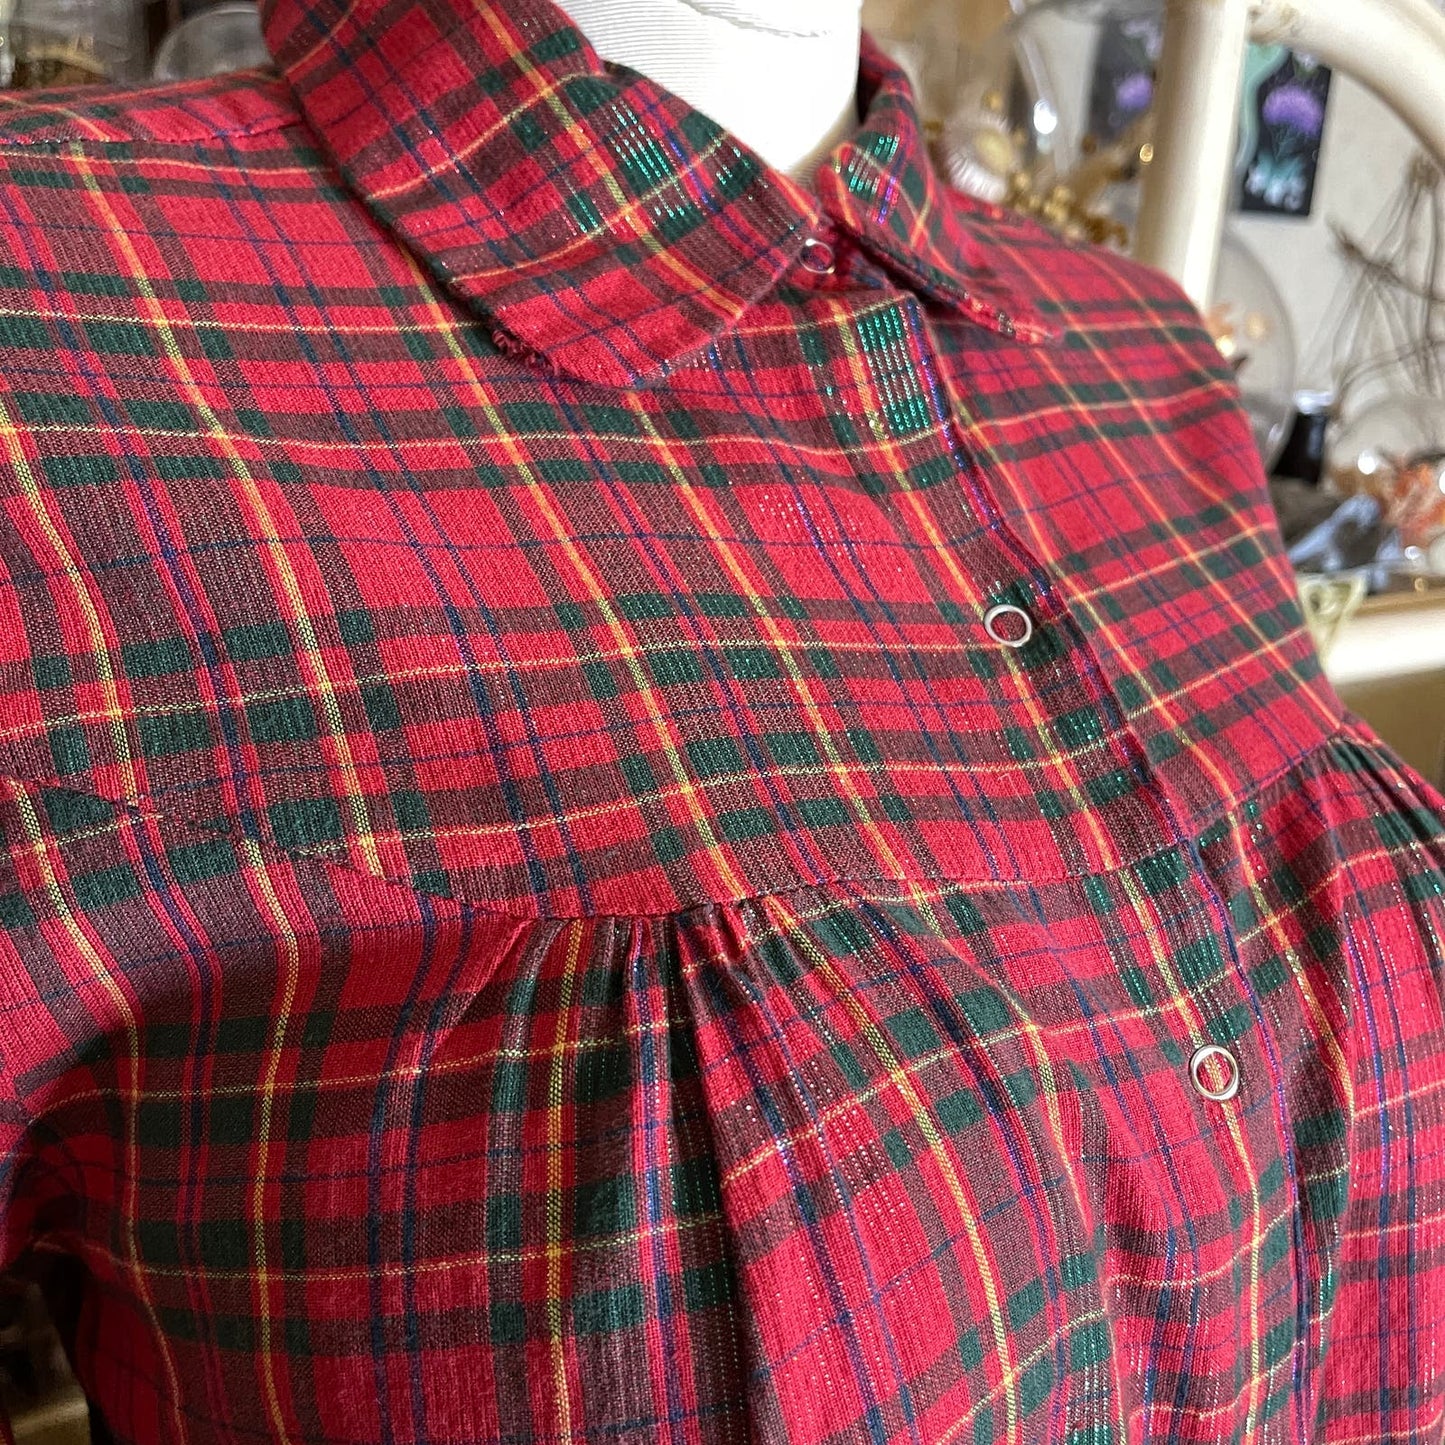 Vintage 90s Red Plaid Cotton Shirt with Lurex Stripes Peter Pan Collar Size M